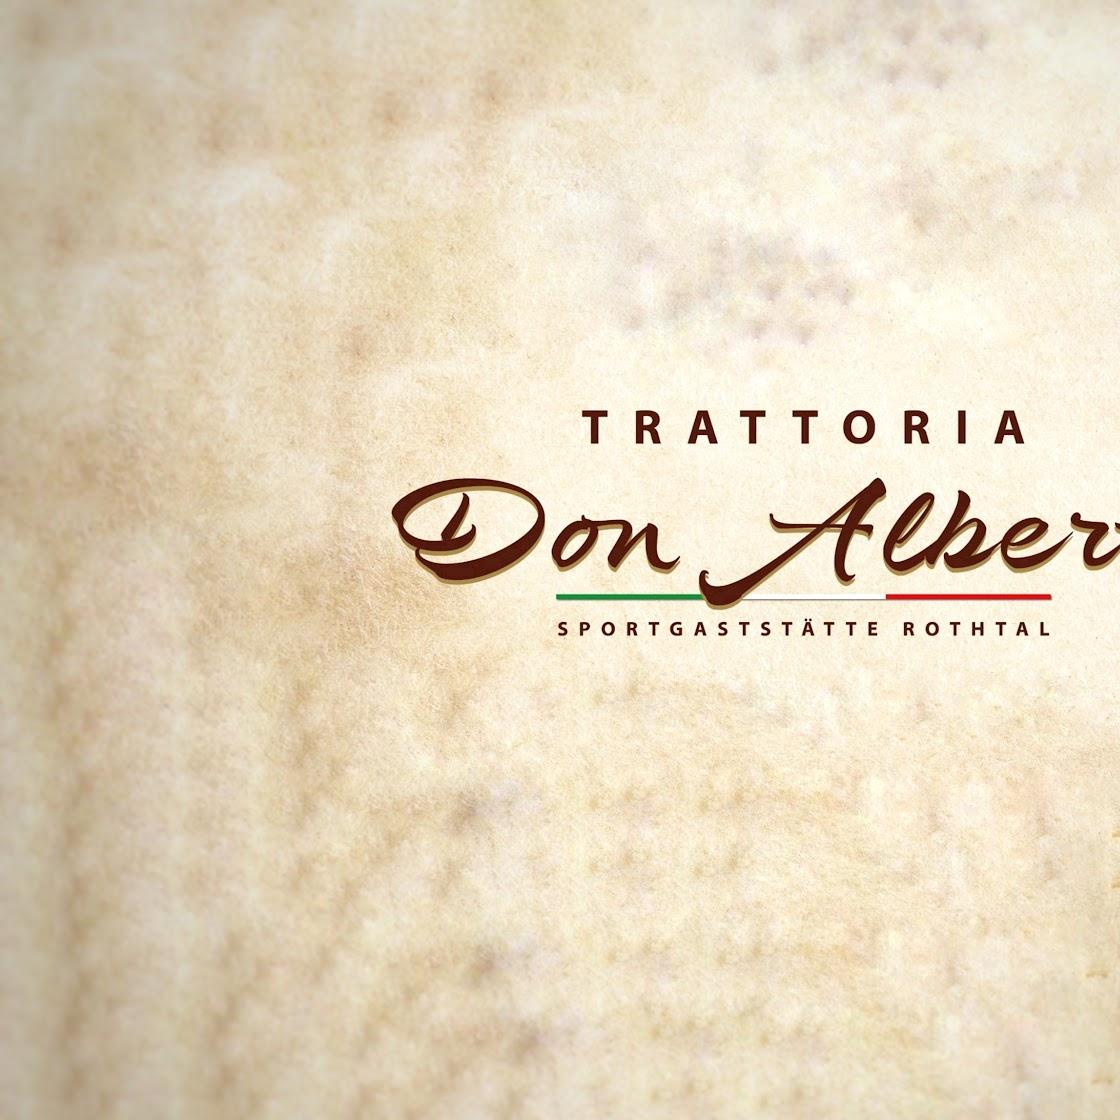 Restaurant "Trattoria Don Alberto" in Horgau